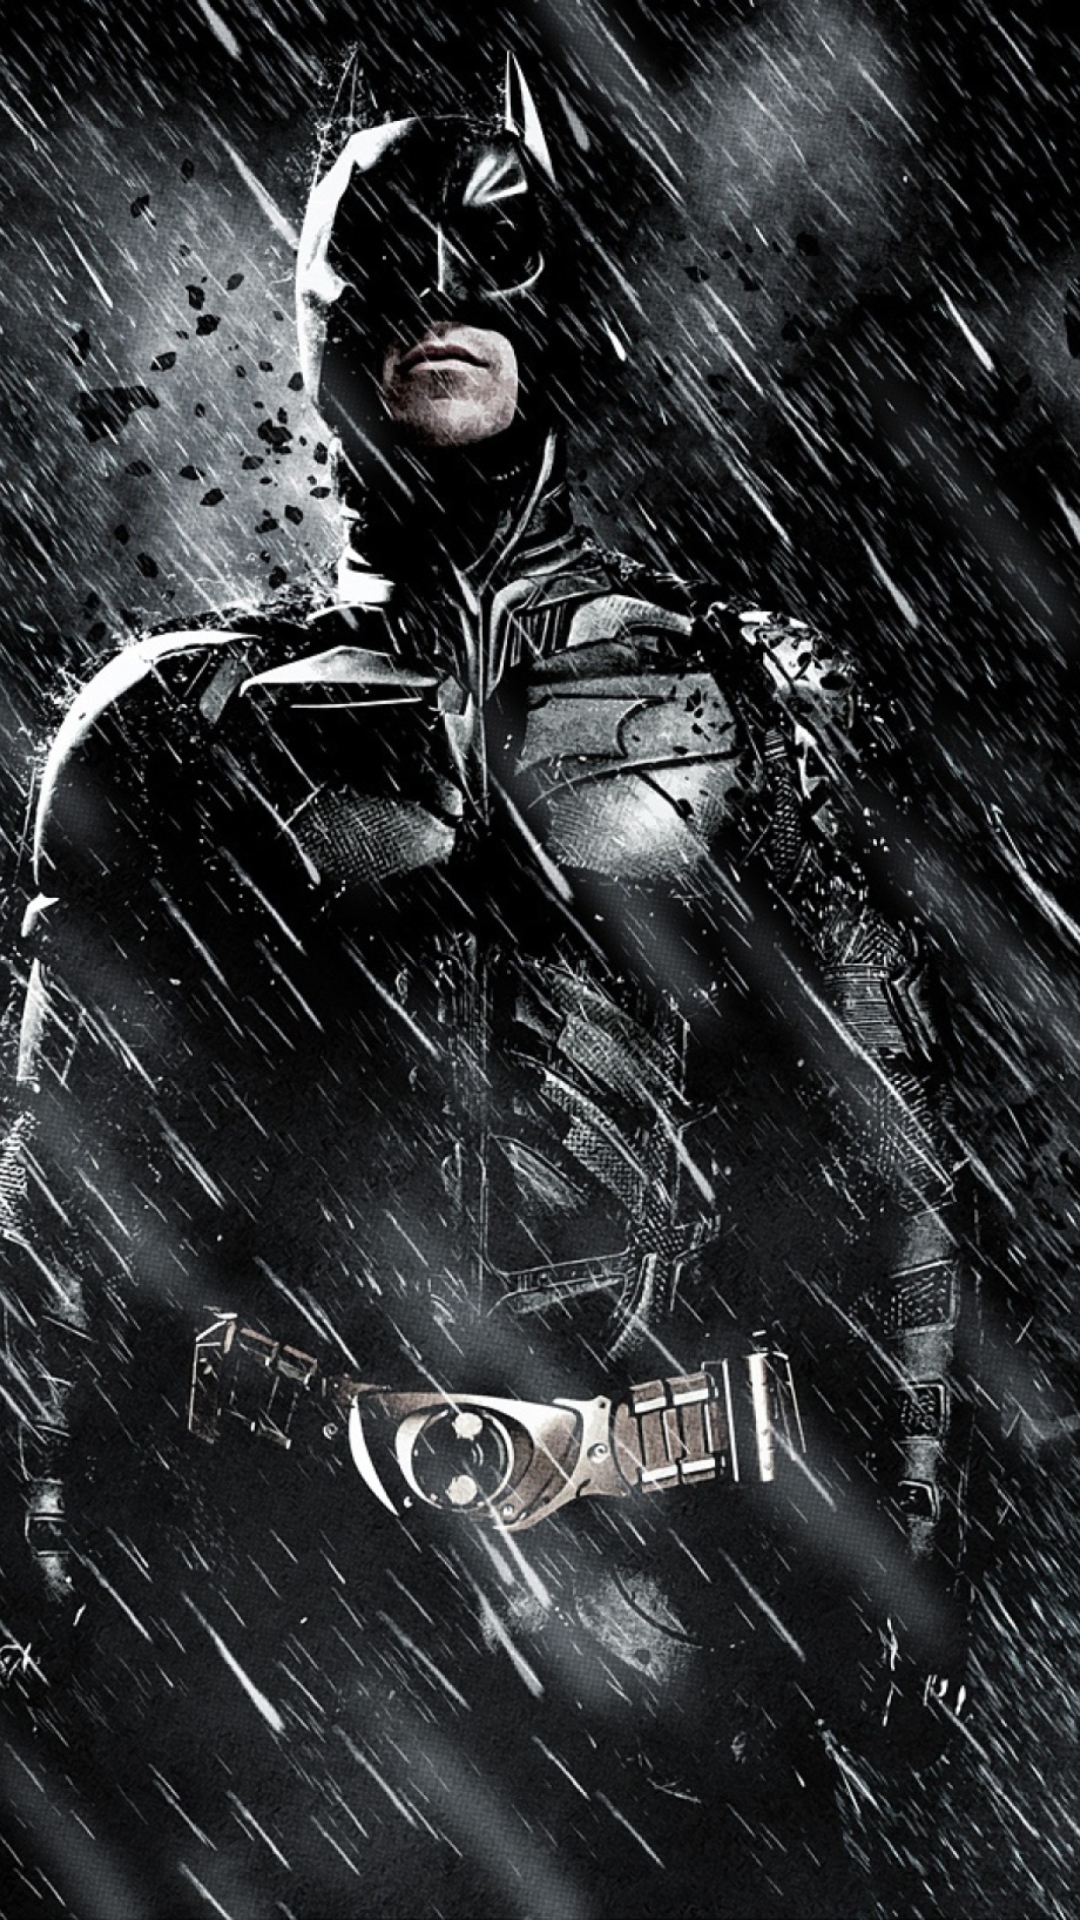 Download Batman Arkham Knight in Action Wallpaper | Wallpapers.com